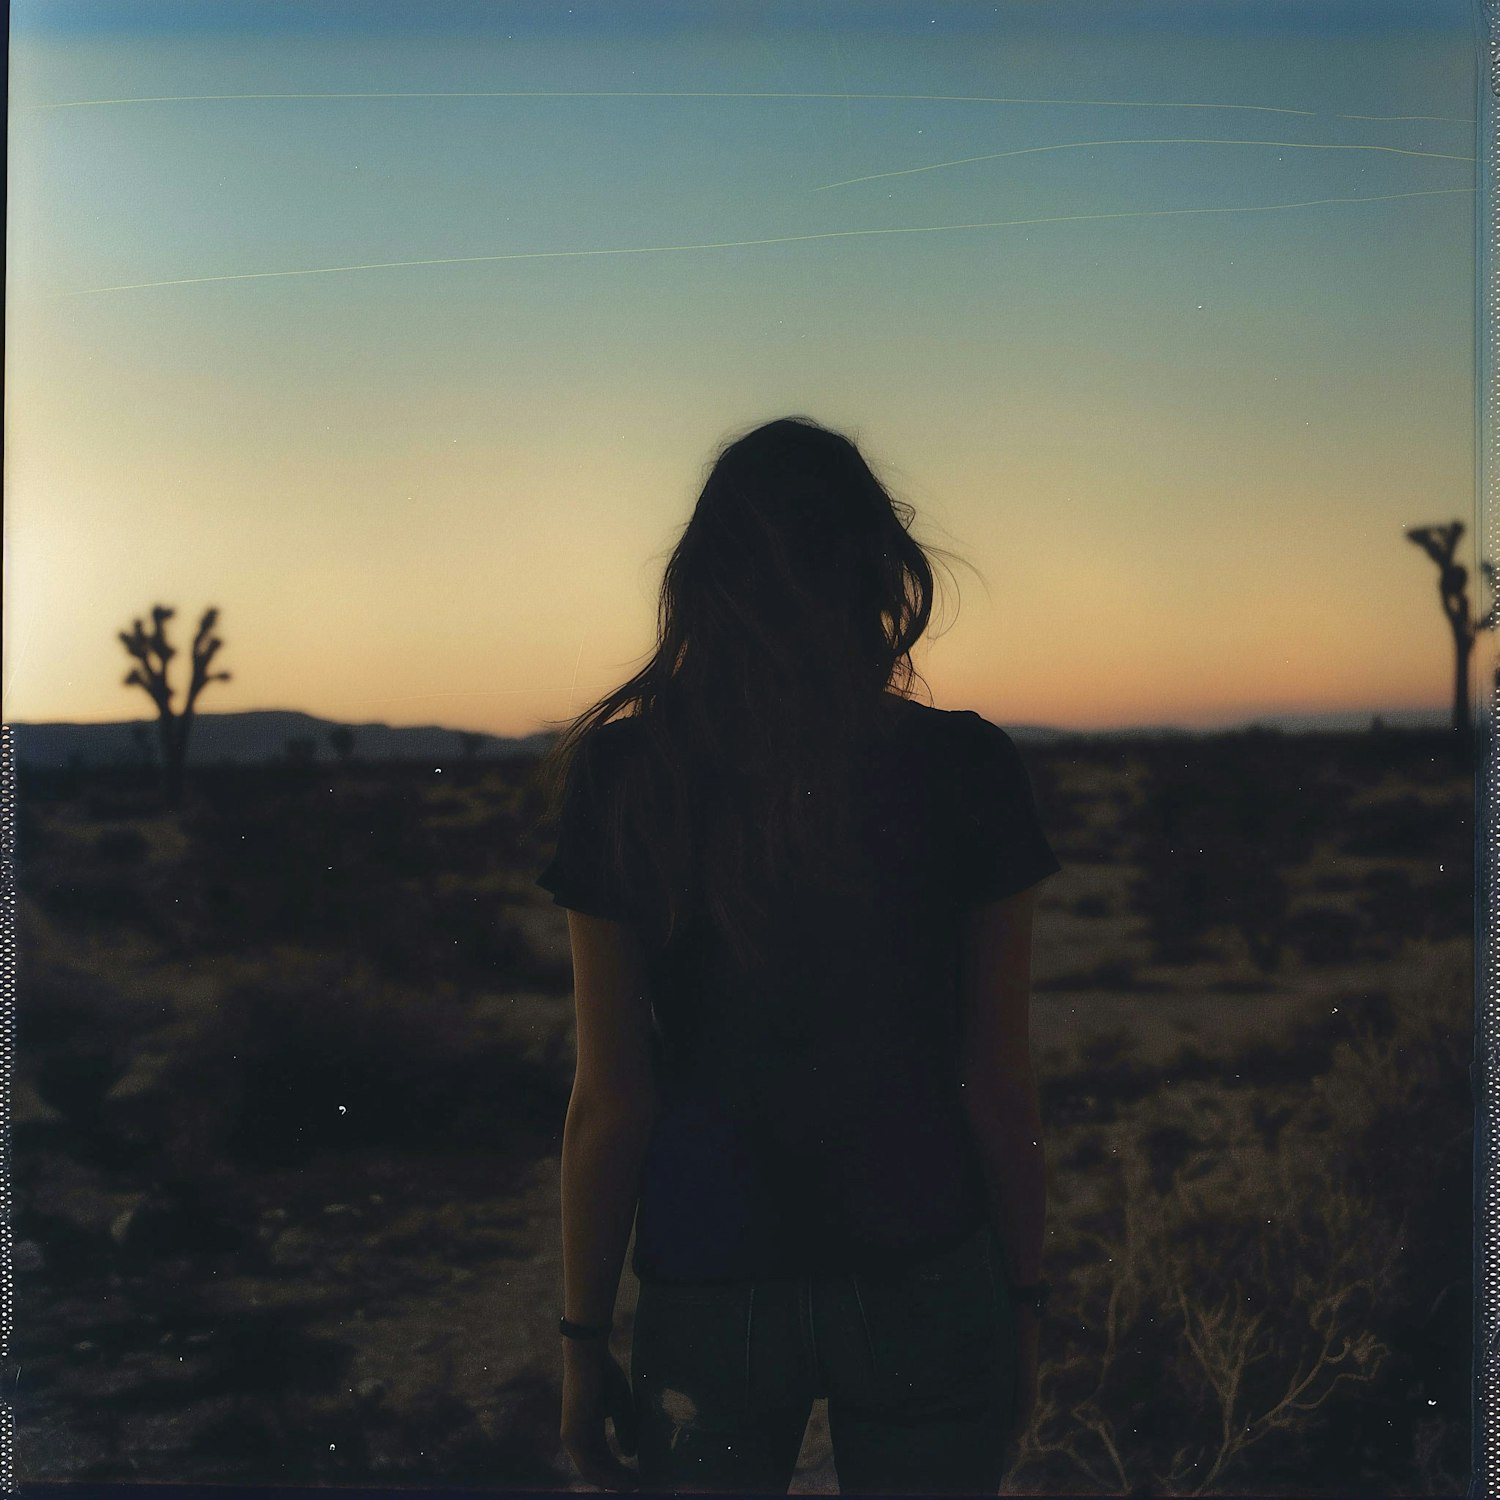 Solitary Woman in Desert at Dusk